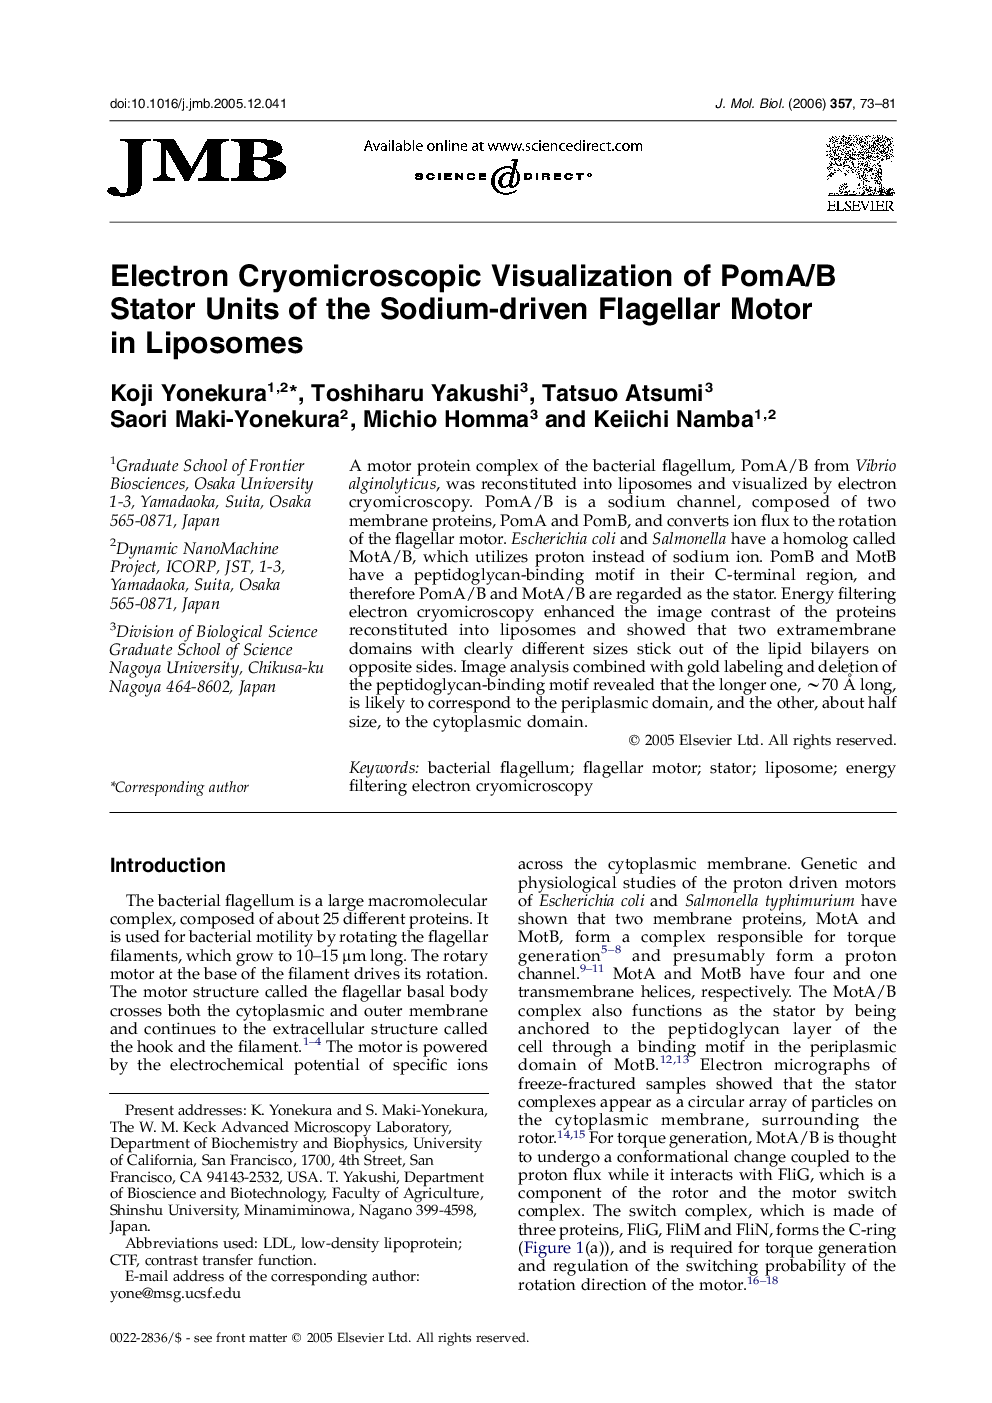 Electron Cryomicroscopic Visualization of PomA/B Stator Units of the Sodium-driven Flagellar Motor in Liposomes